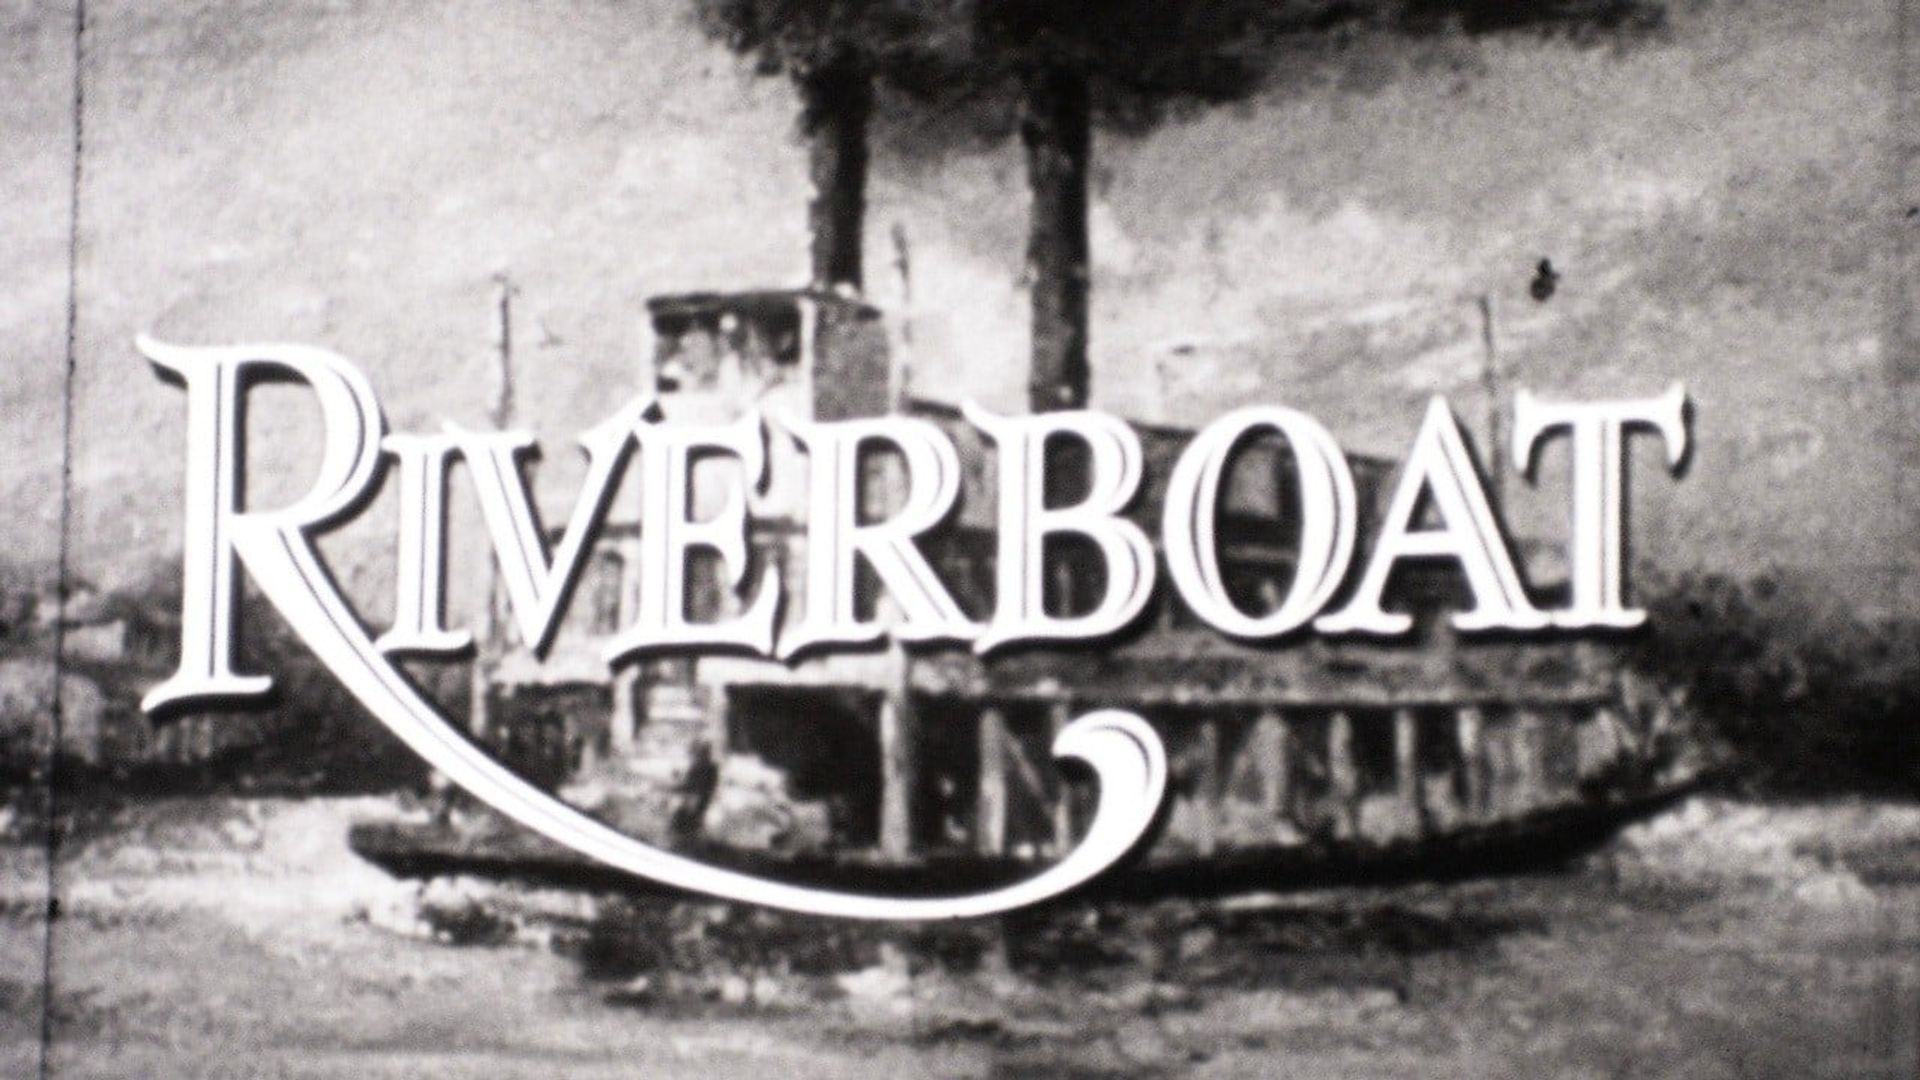 Riverboat background